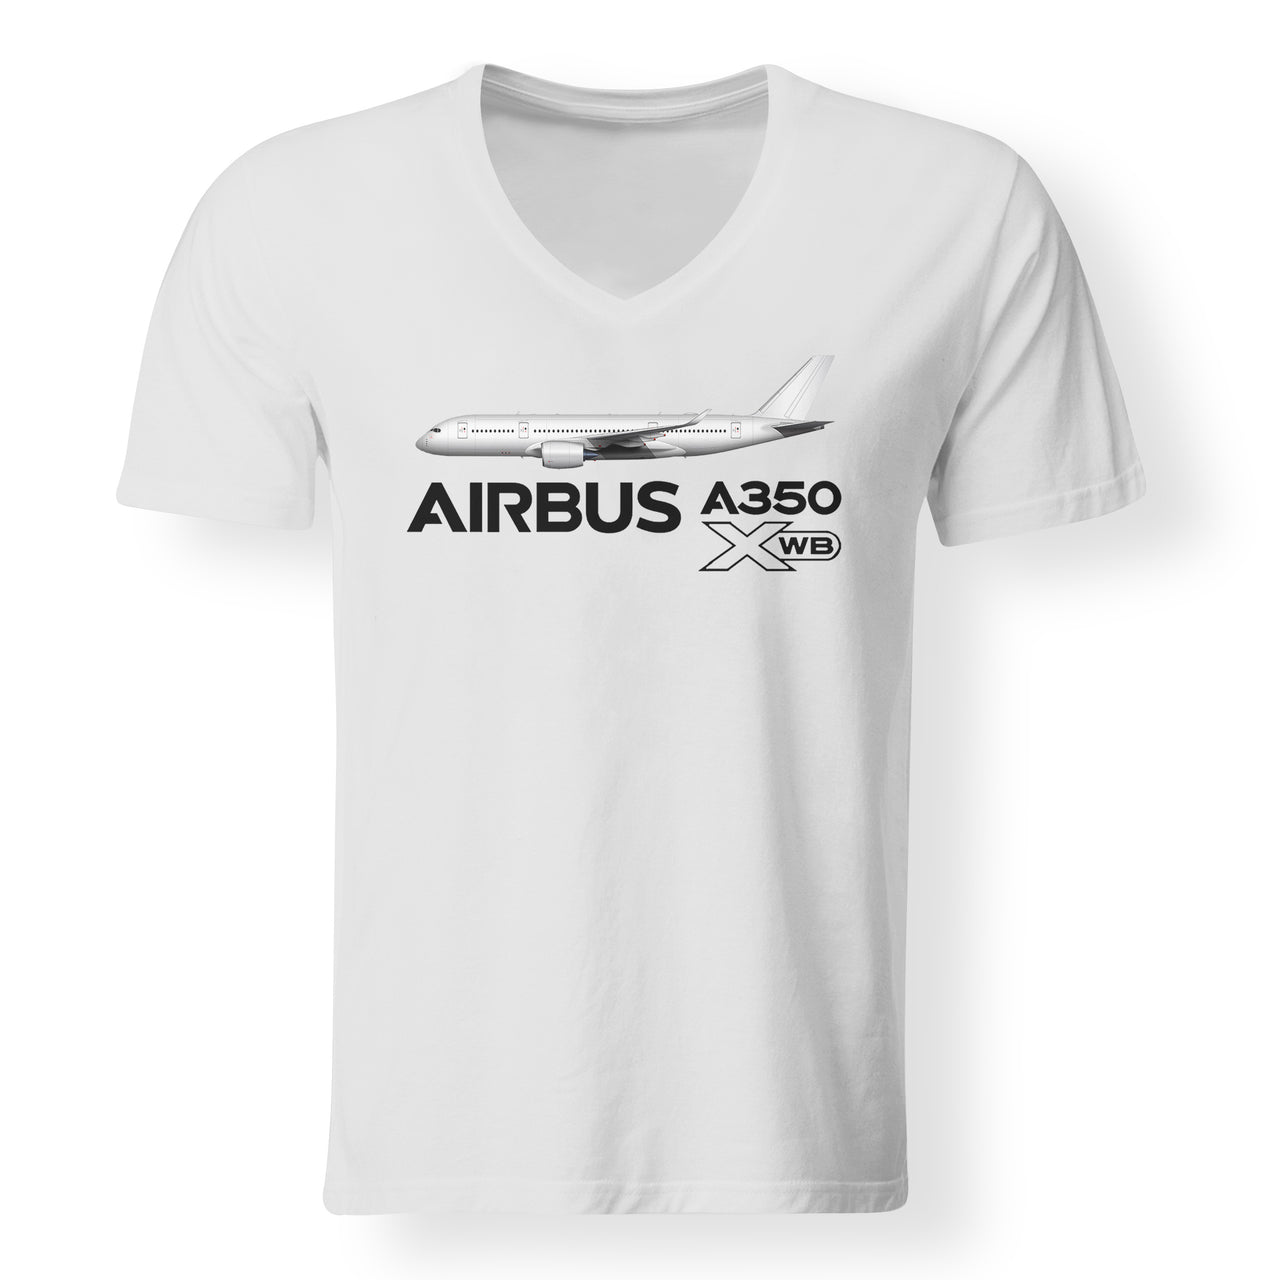 The Airbus A350 WXB Designed V-Neck T-Shirts